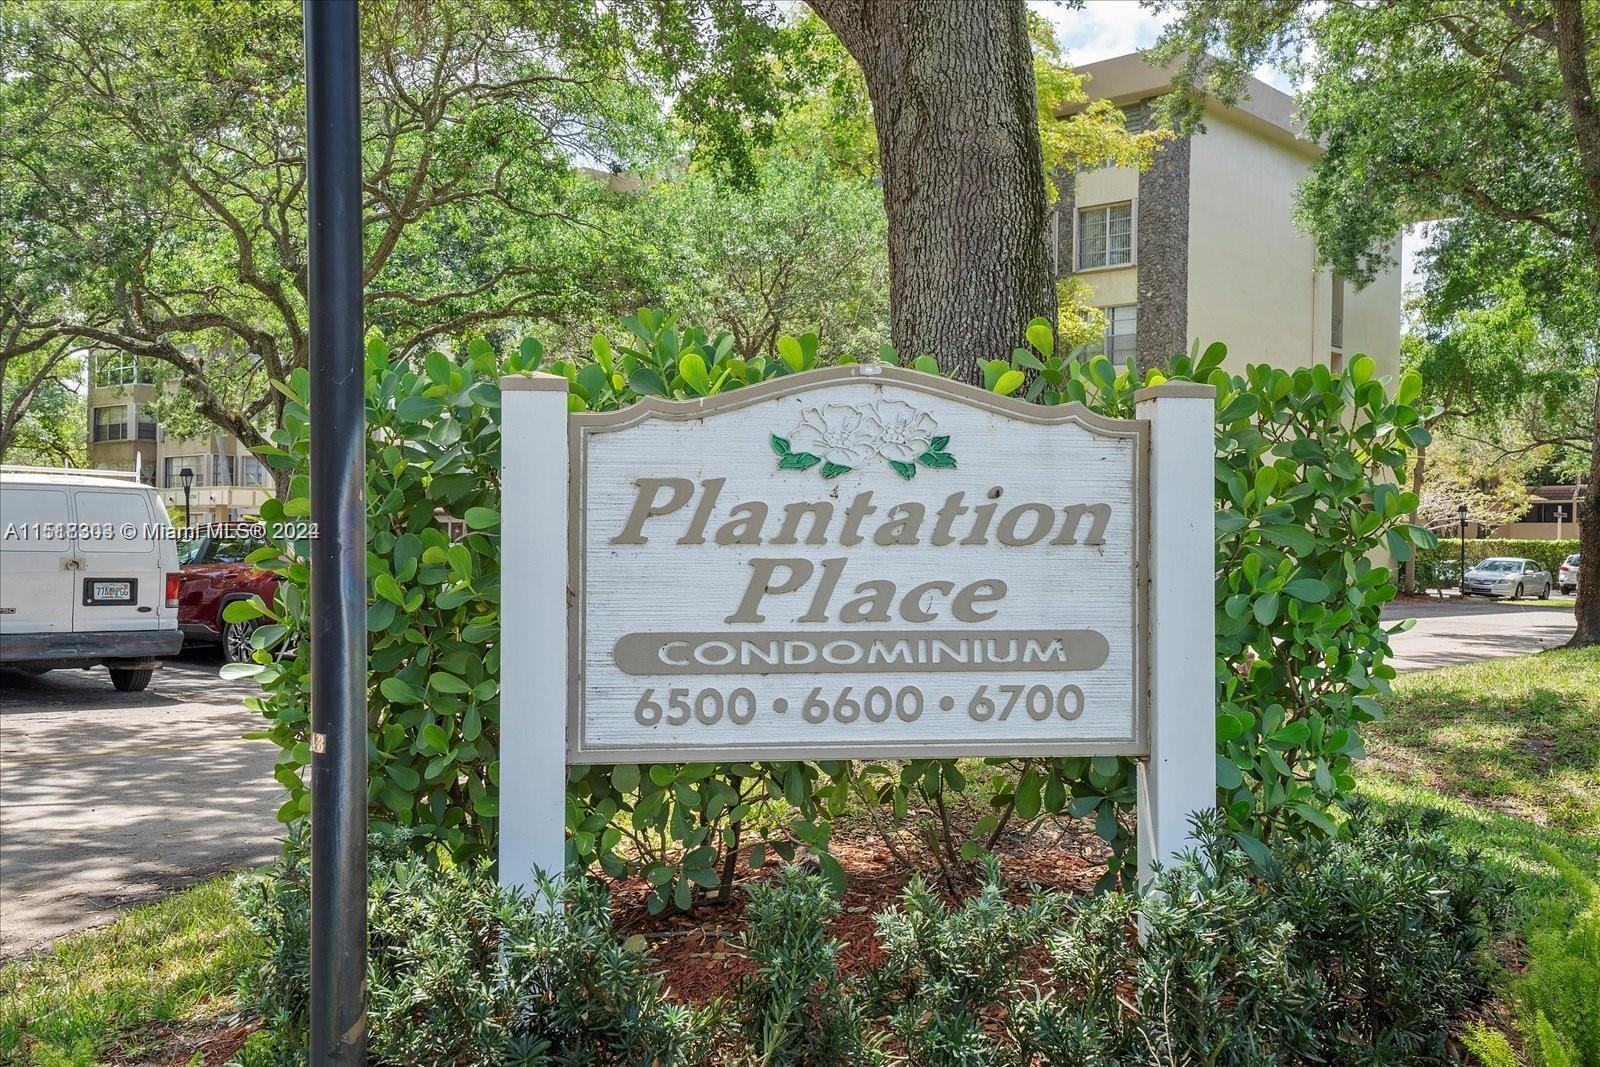 View Plantation, FL 33317 condo